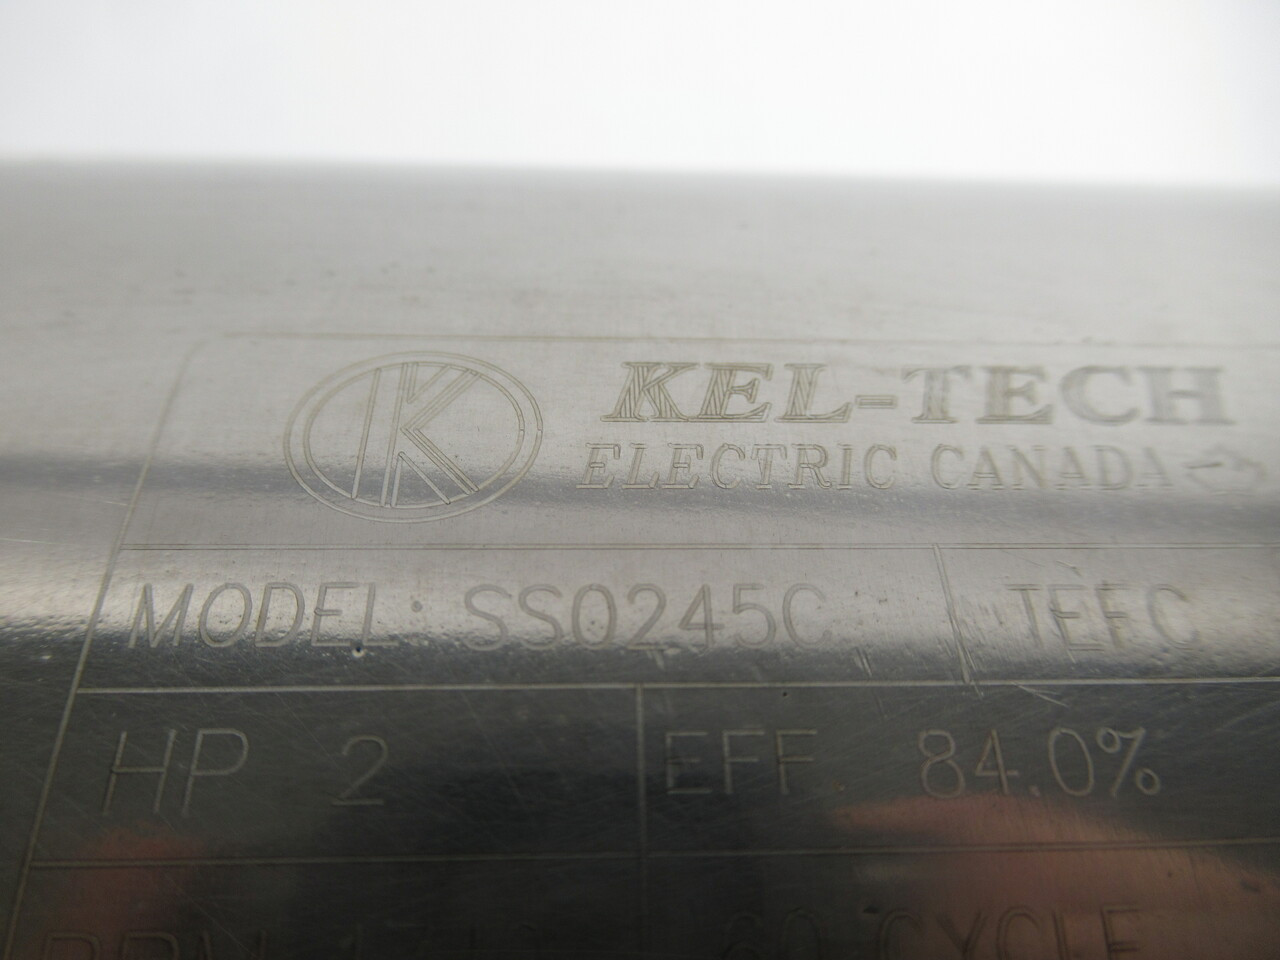 Keltech 2HP SS0245C 1740RPM 575V 56C TEFC 3Ph 2.10/2.42A 60Hz USED